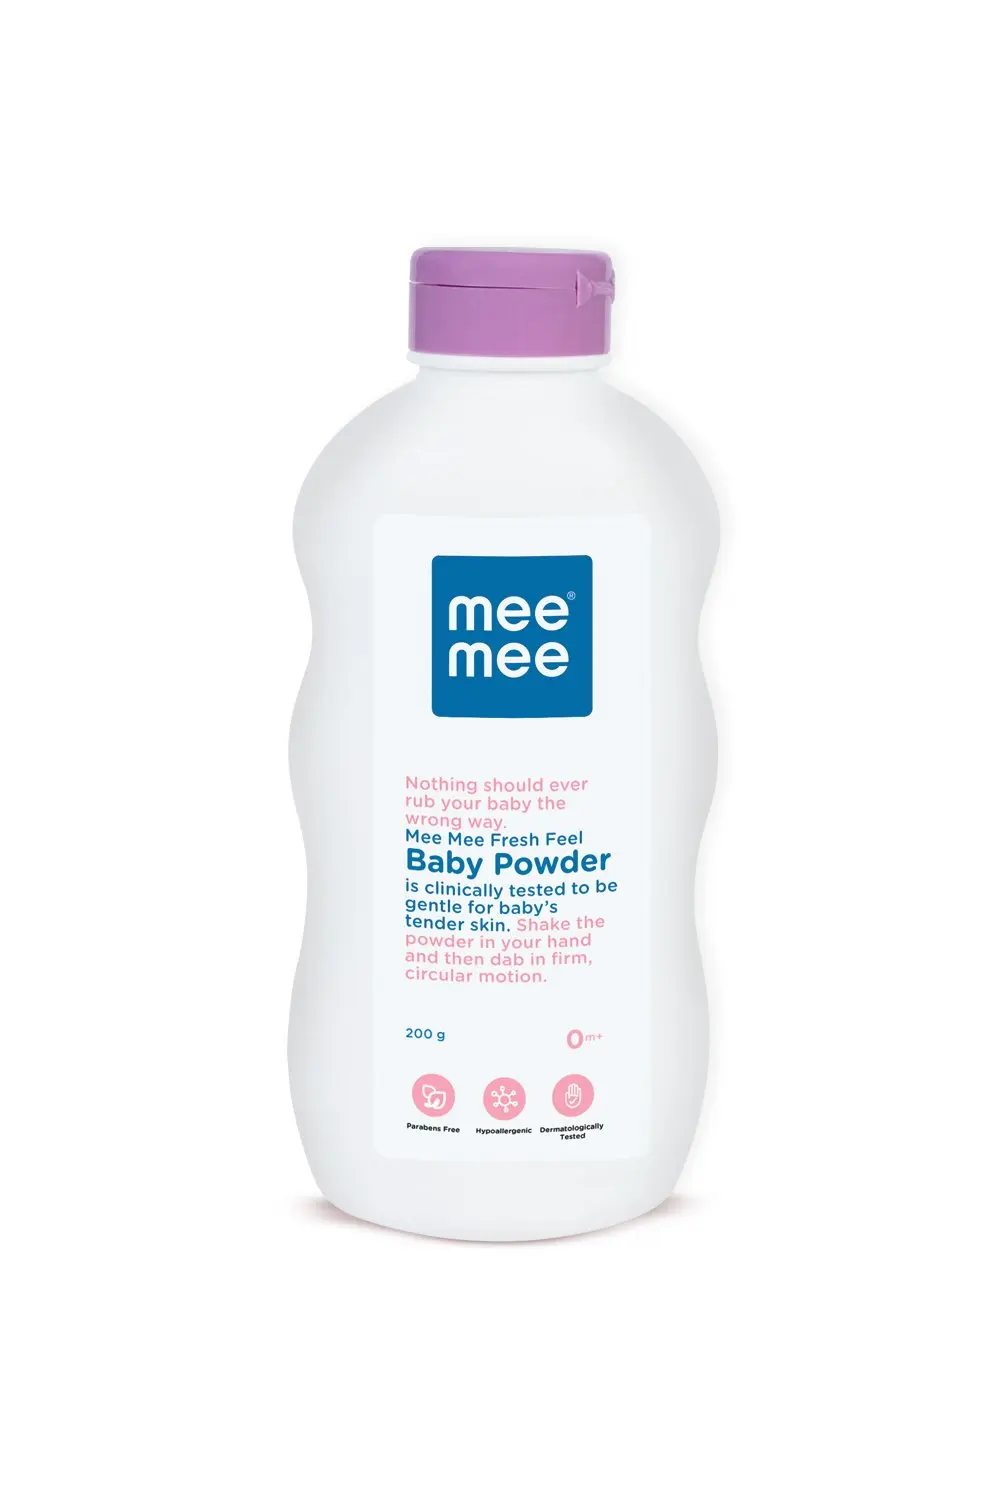 Mee Mee Fresh Feel Baby Powder 200g